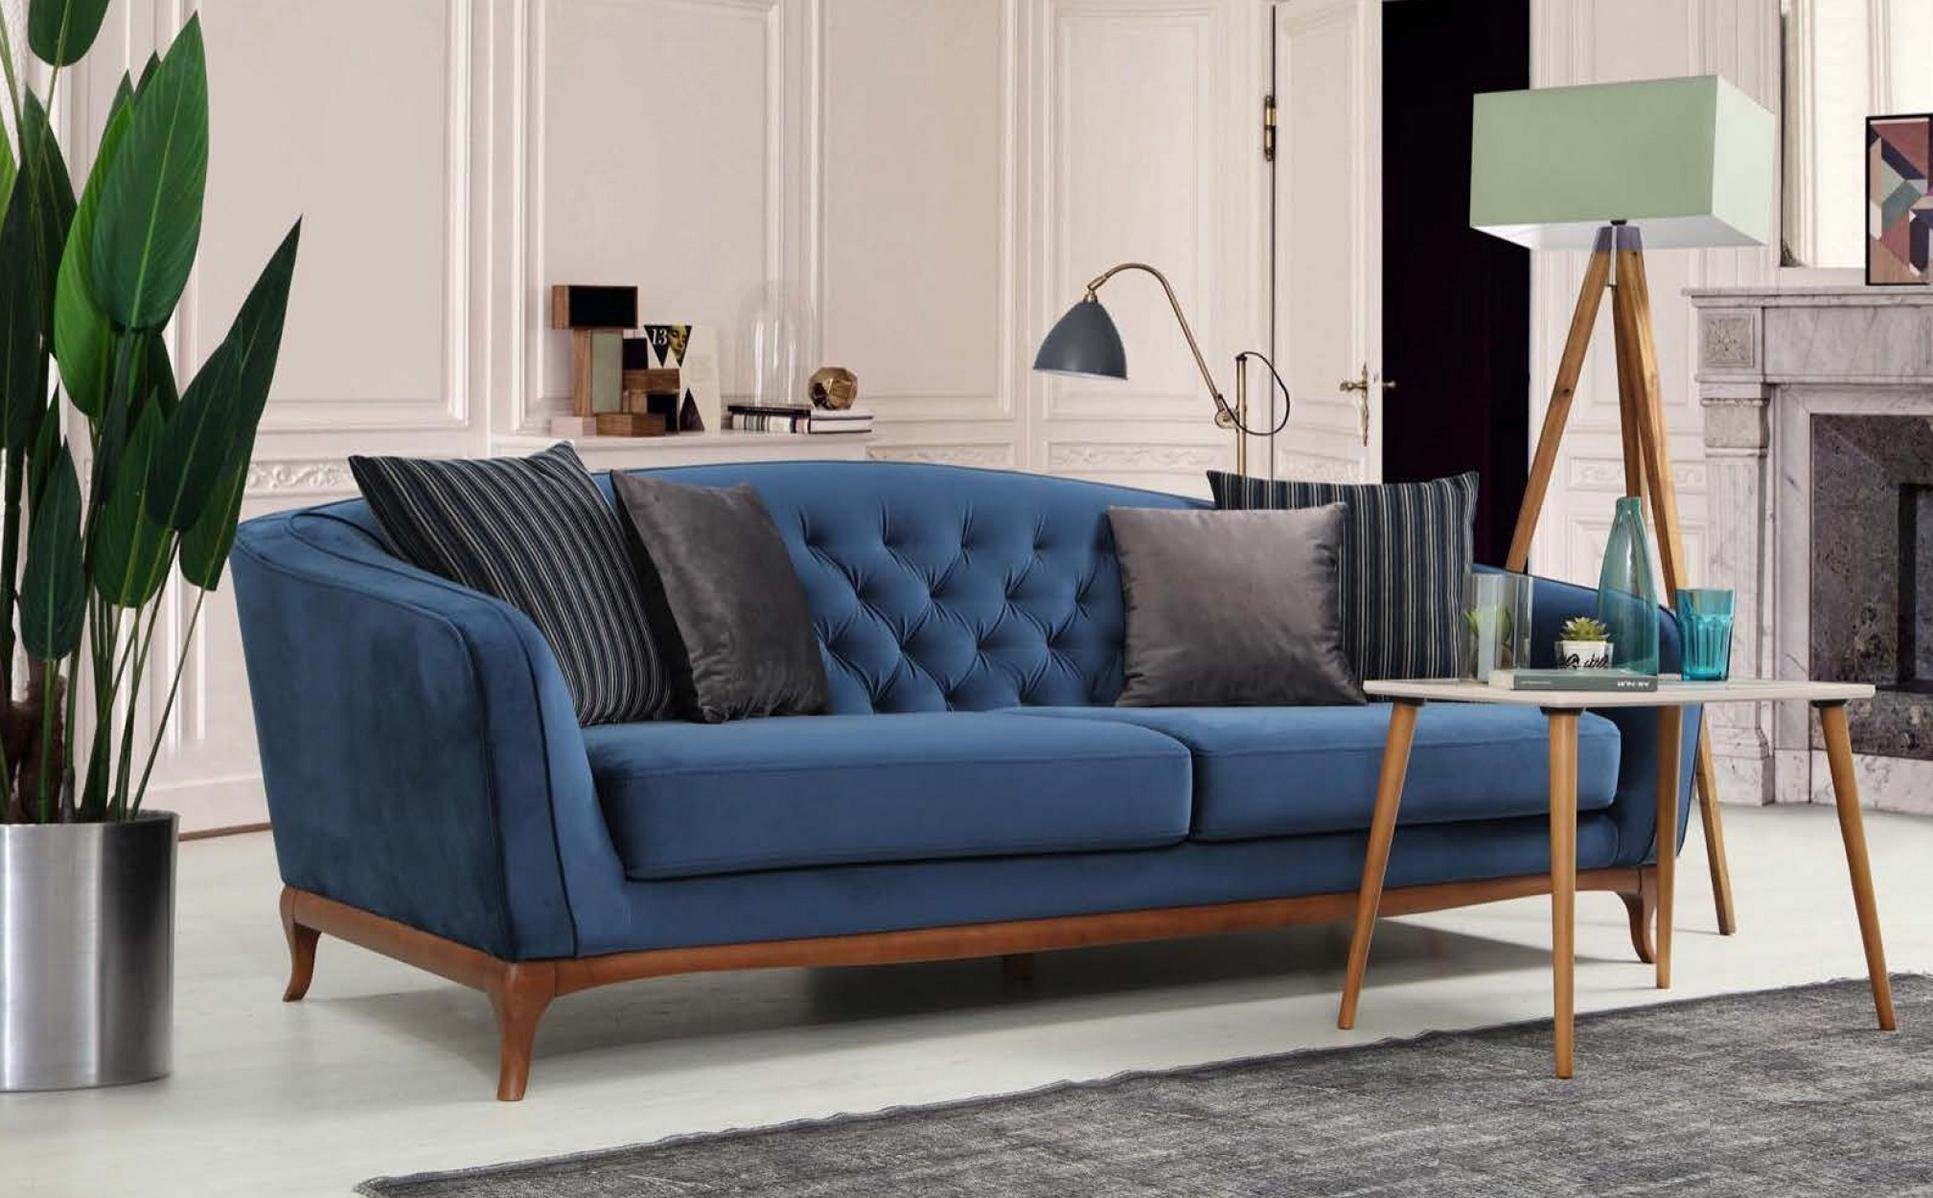 JVmoebel Sofa Blaues Chesterfield Sofa Dreisitzer Luxus moderne Möbel Neu, Made in Europe